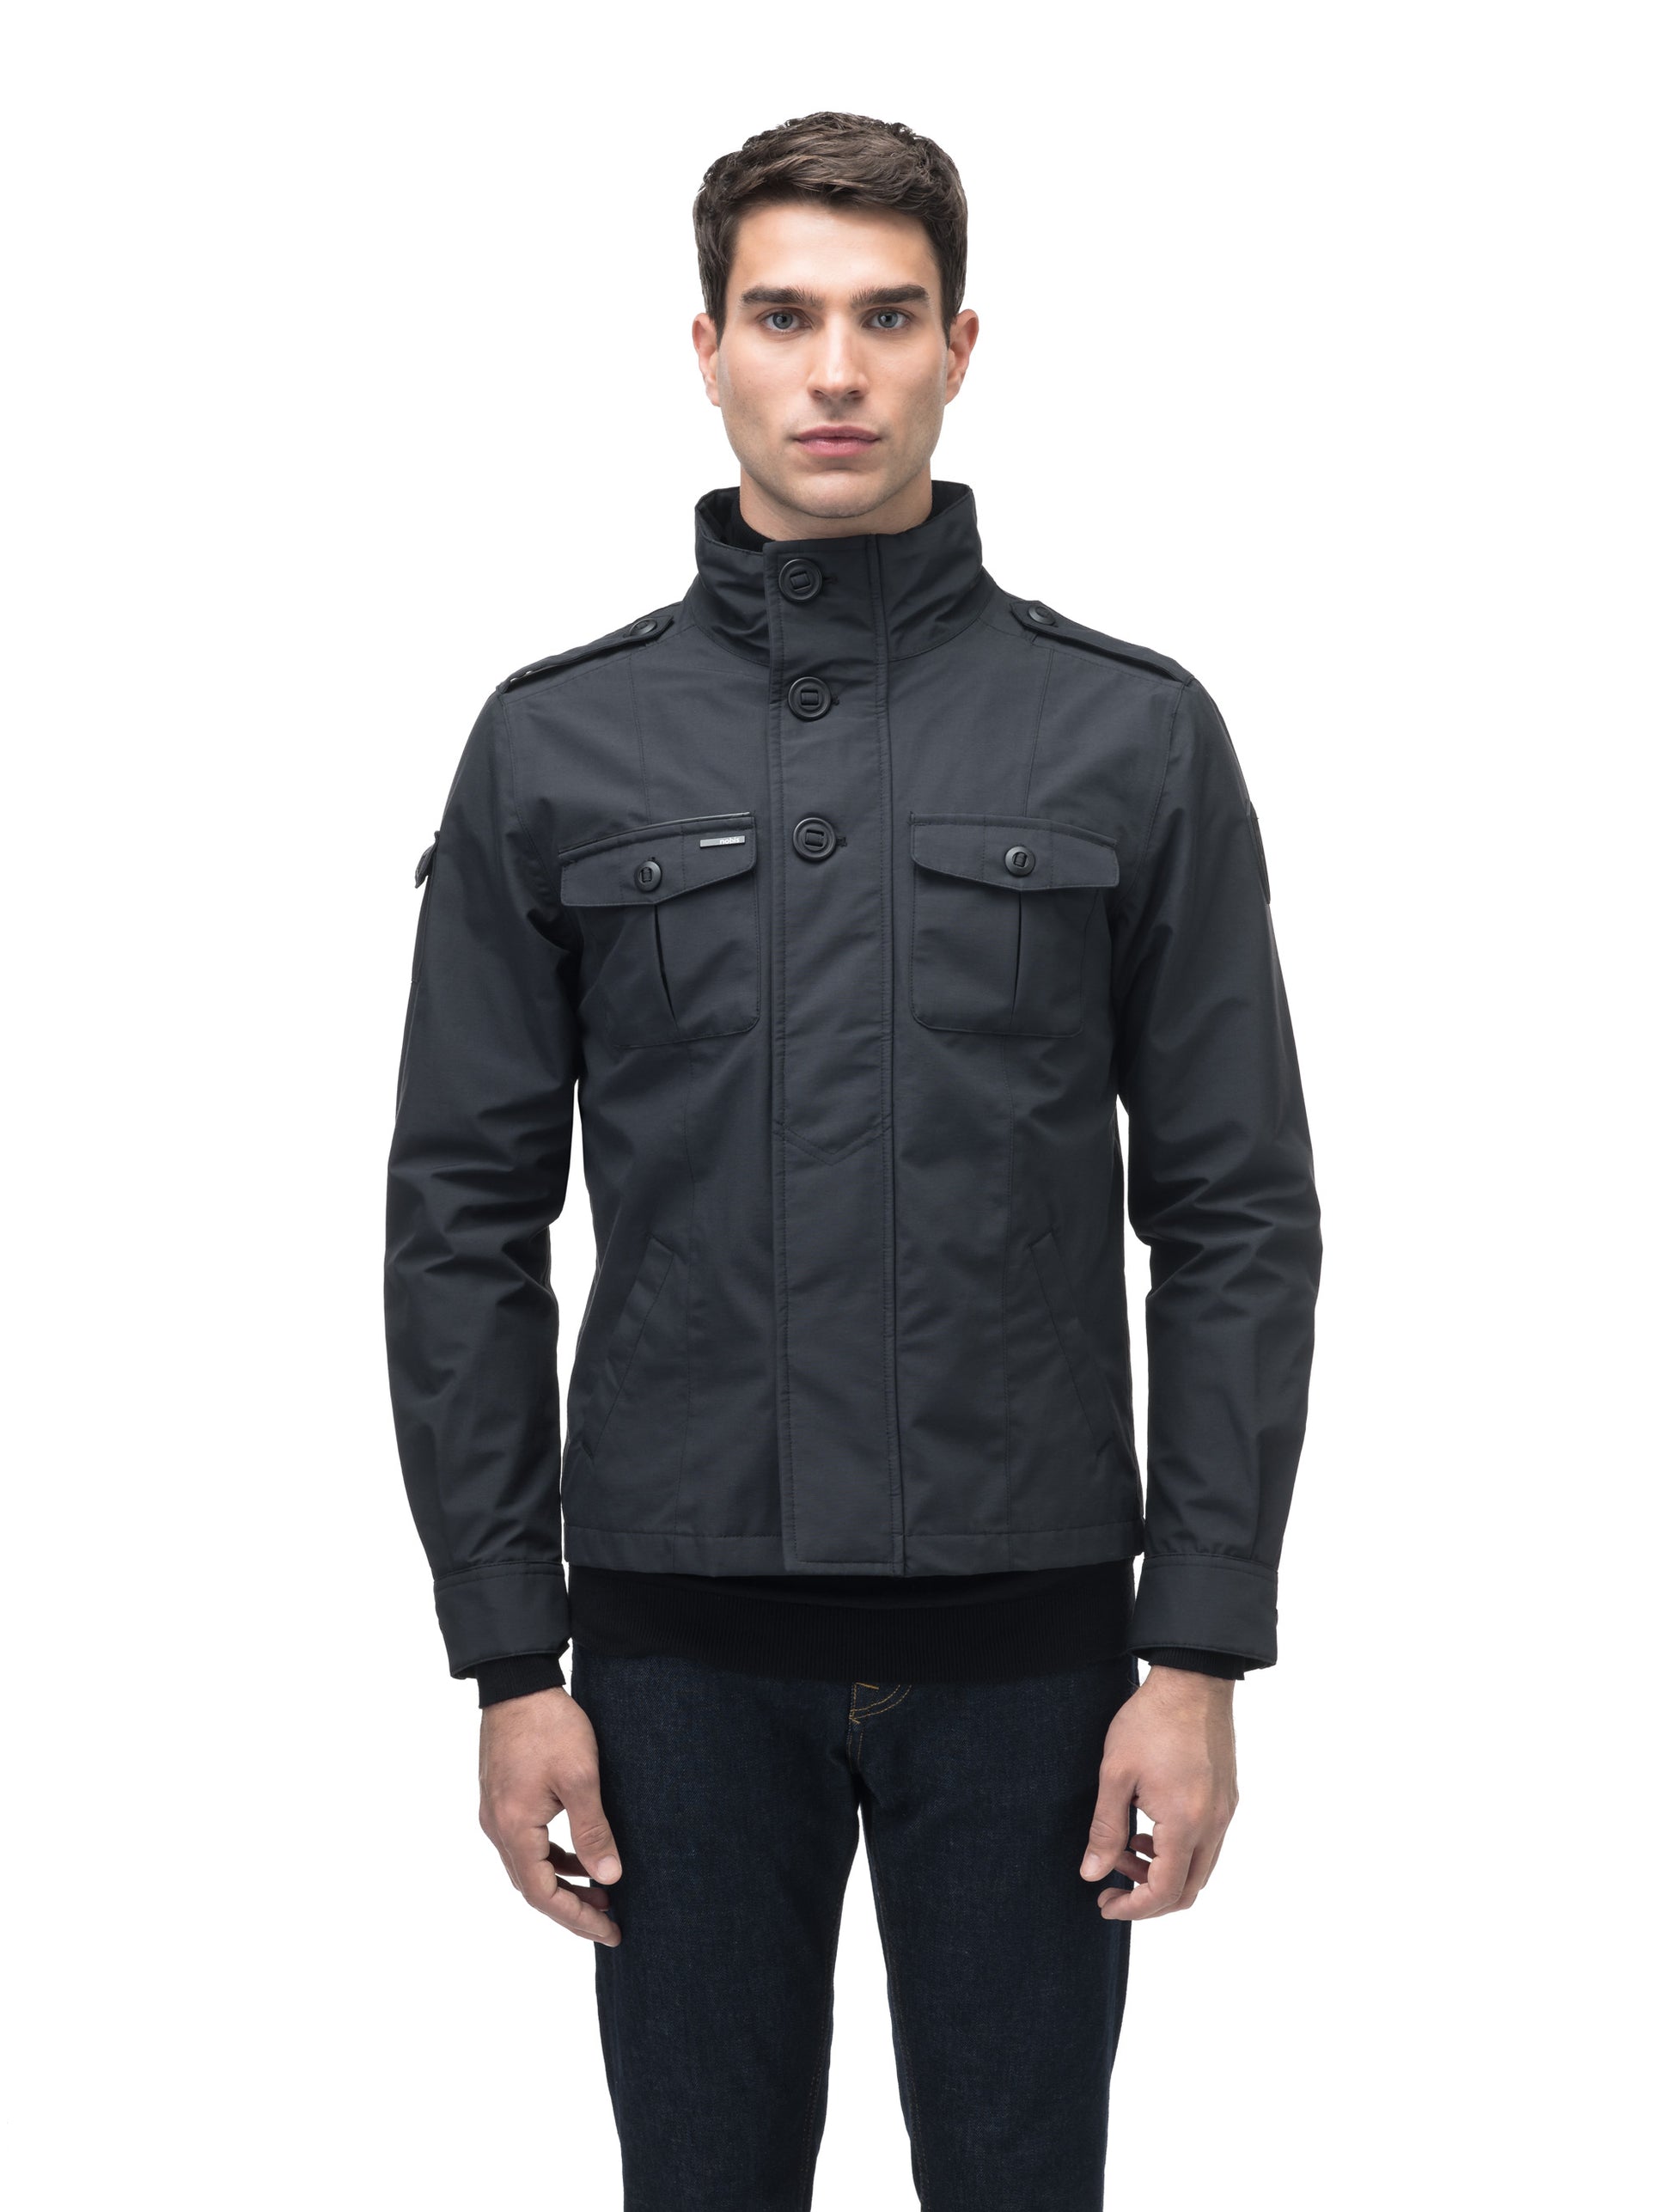 Men's waist length military style jacket in Black